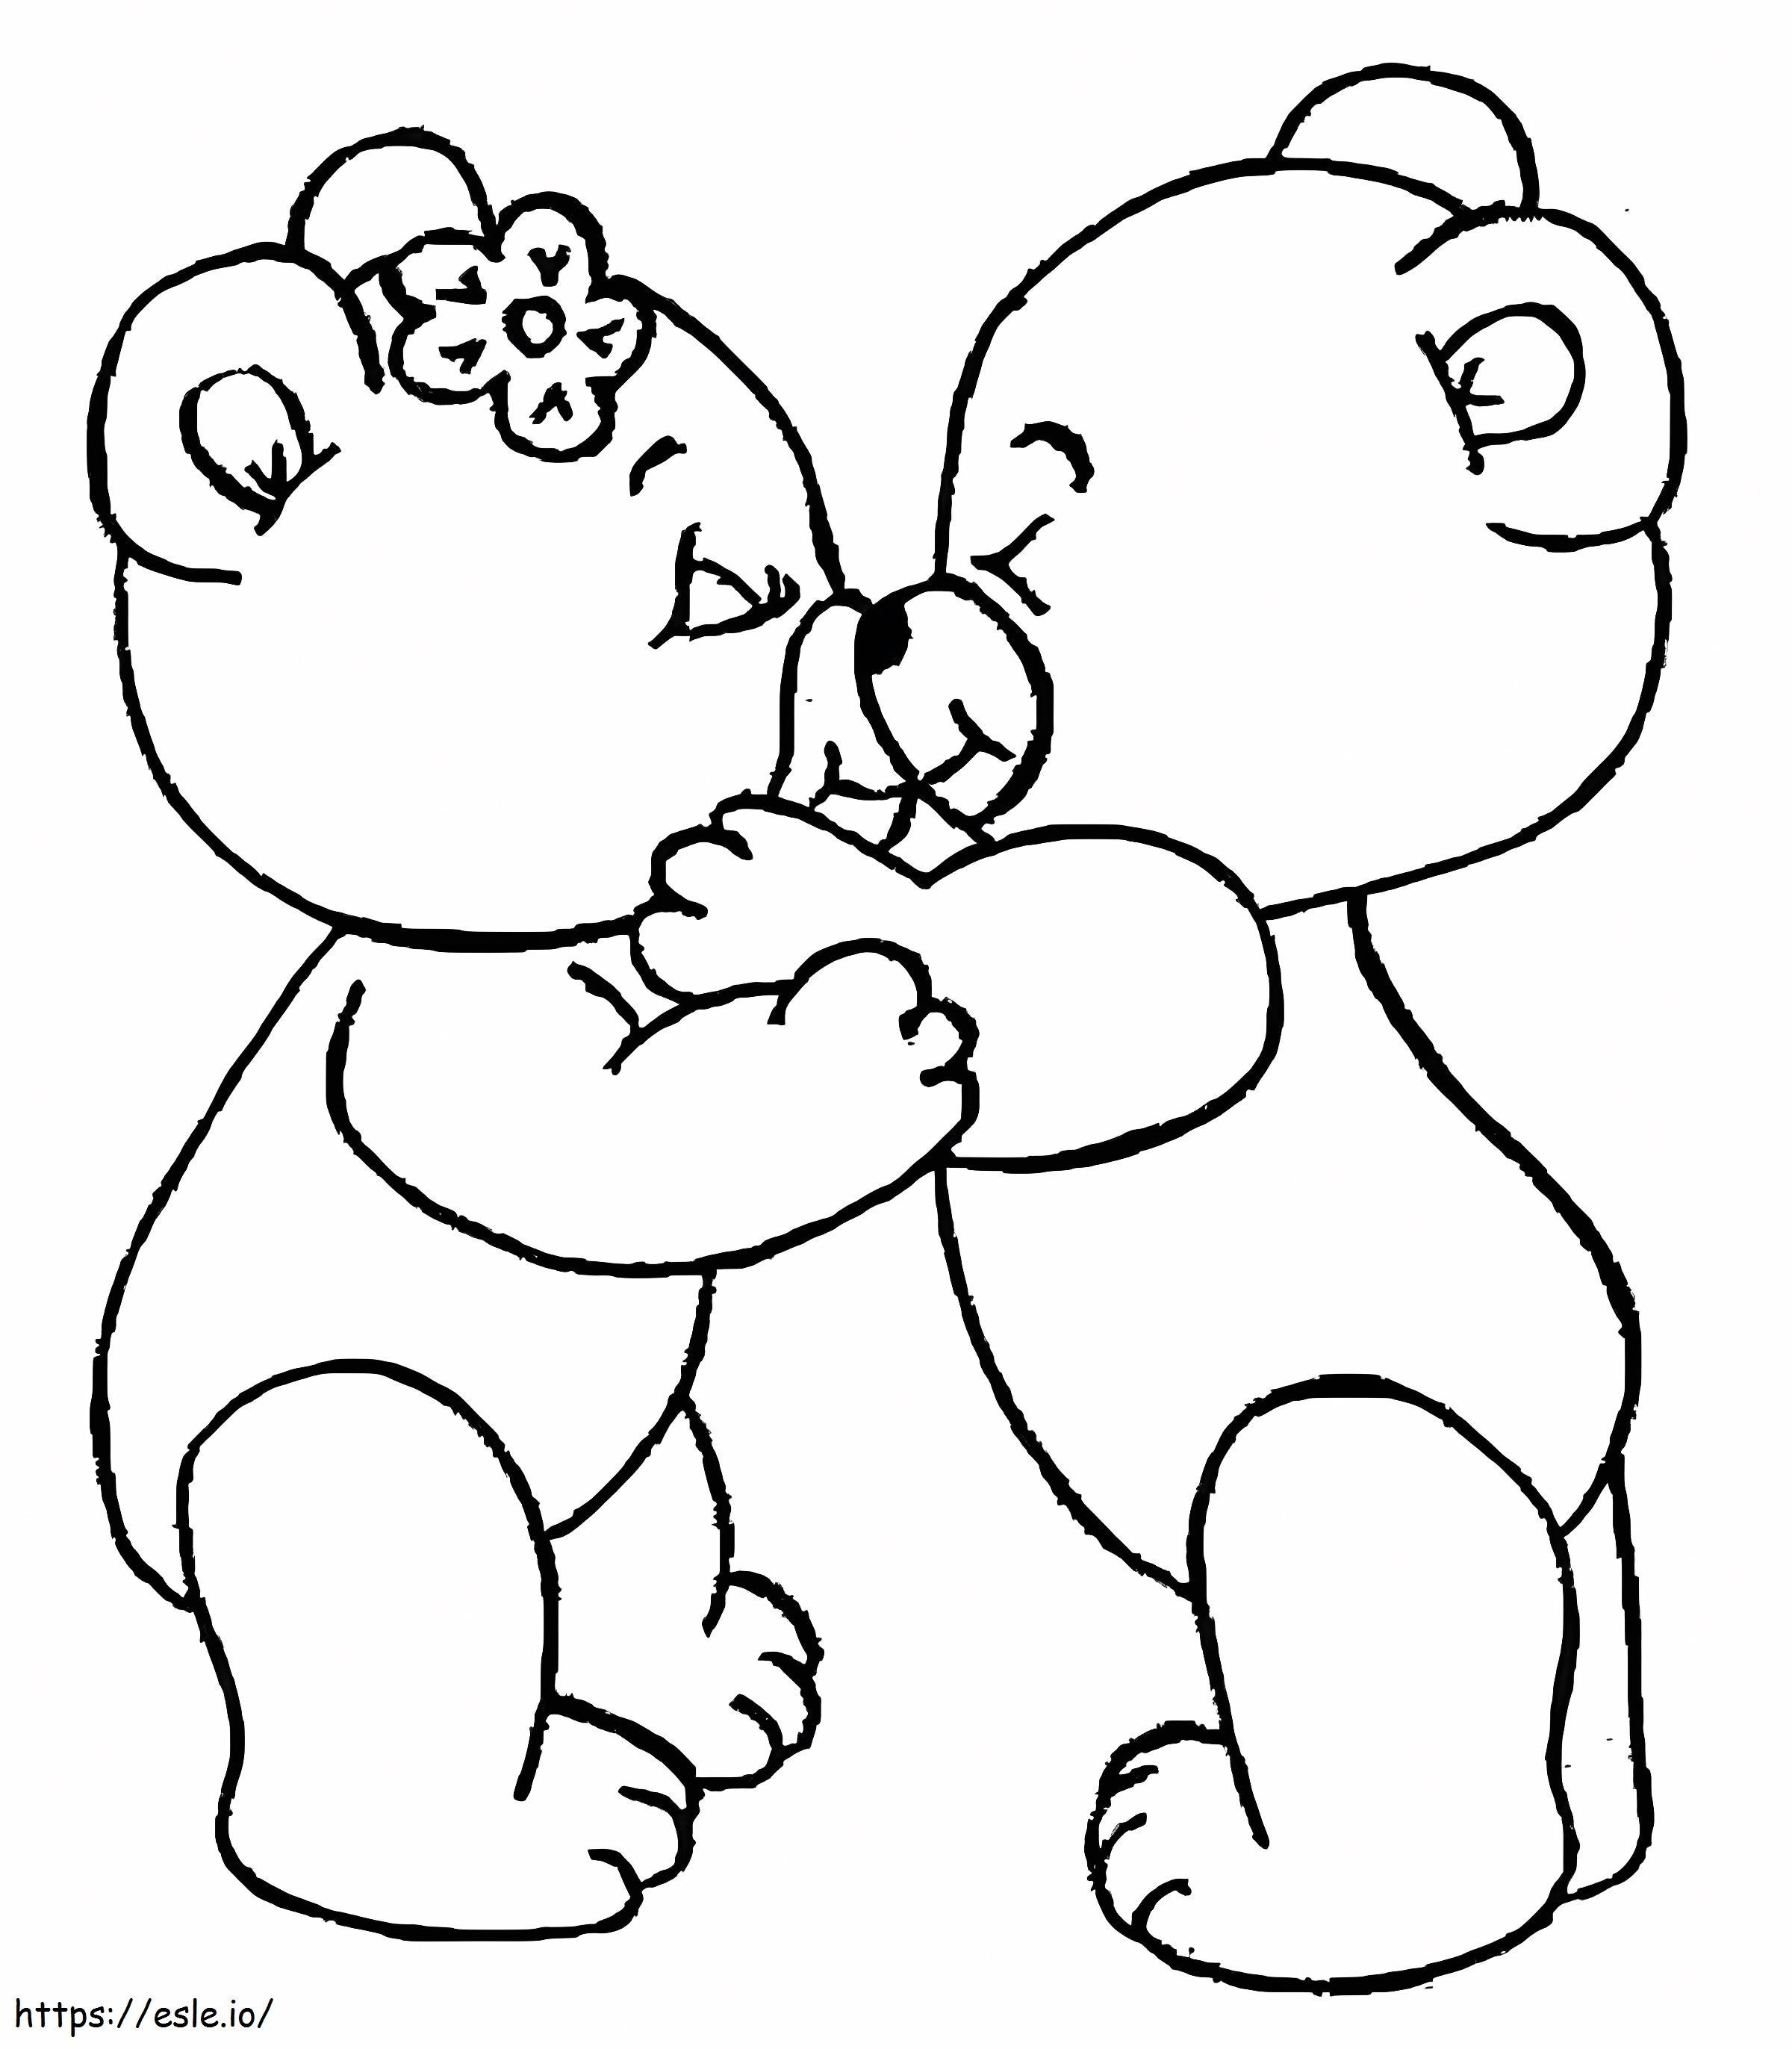 Amor besando oso para colorear